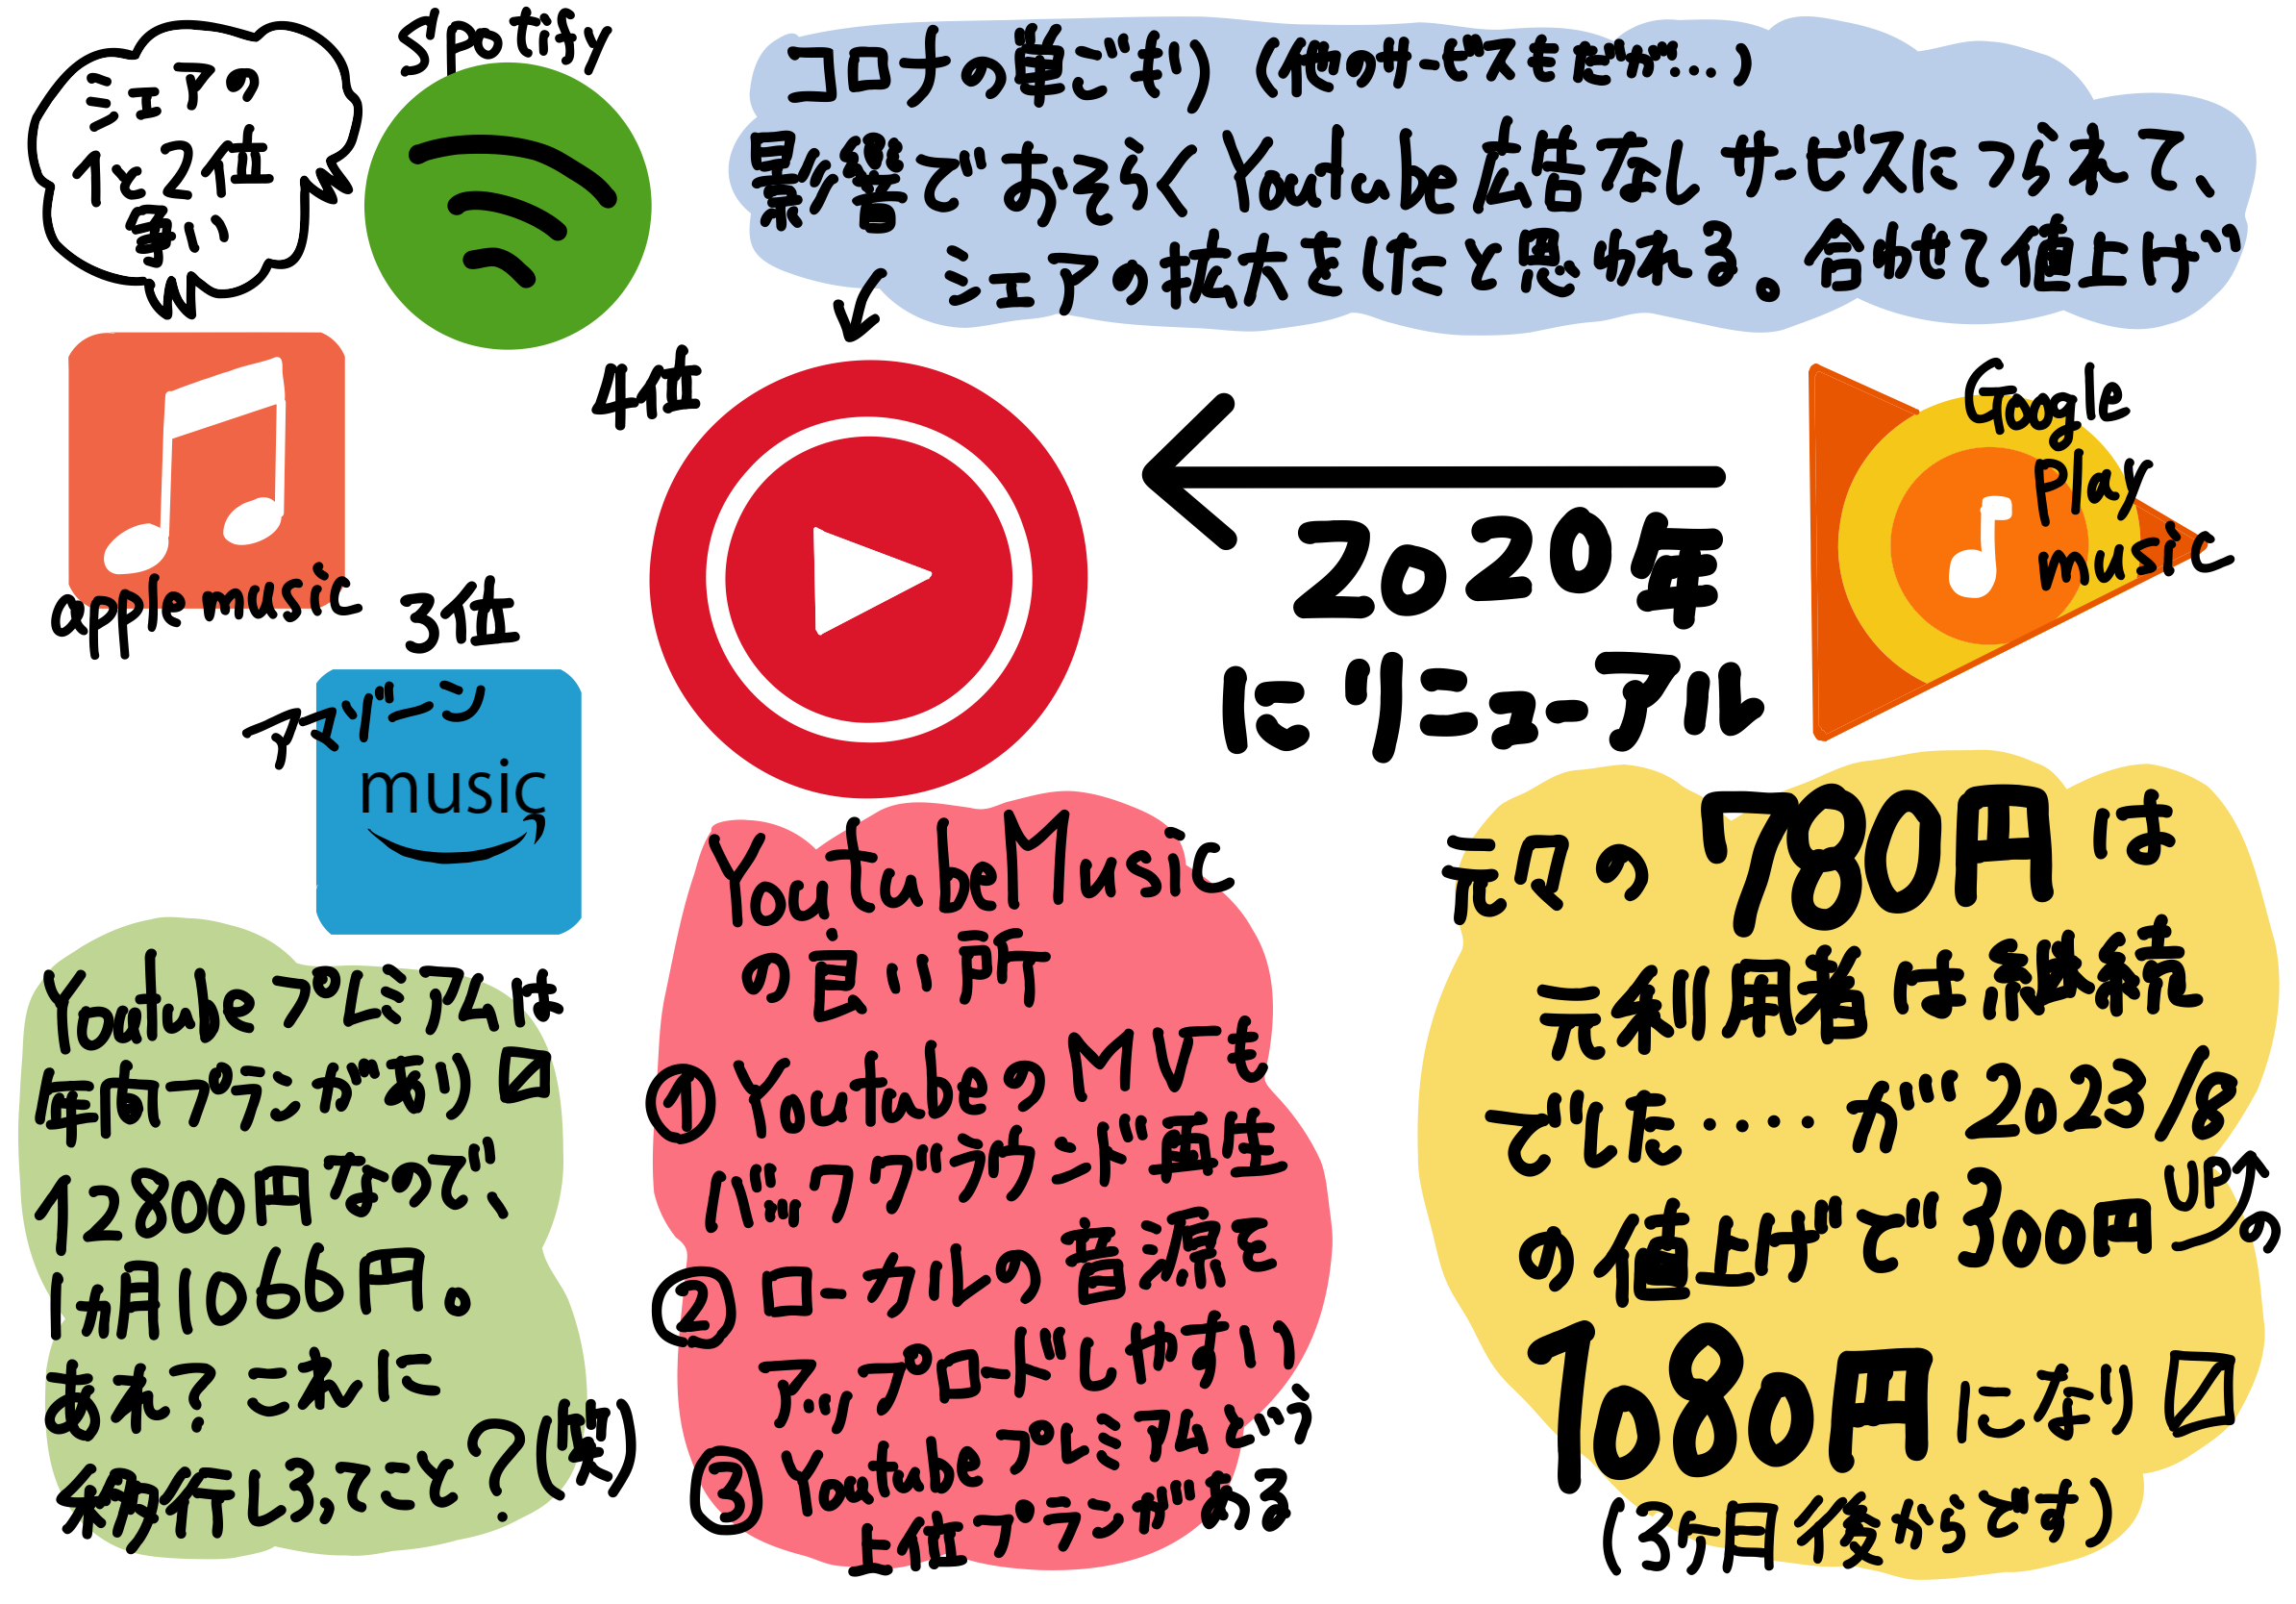 Youtube Music の値上げは 旧 Google play music からの移行組 780 円も対象で どちらも 1080円になる模様（google ヘルプに問い合わせ済み）